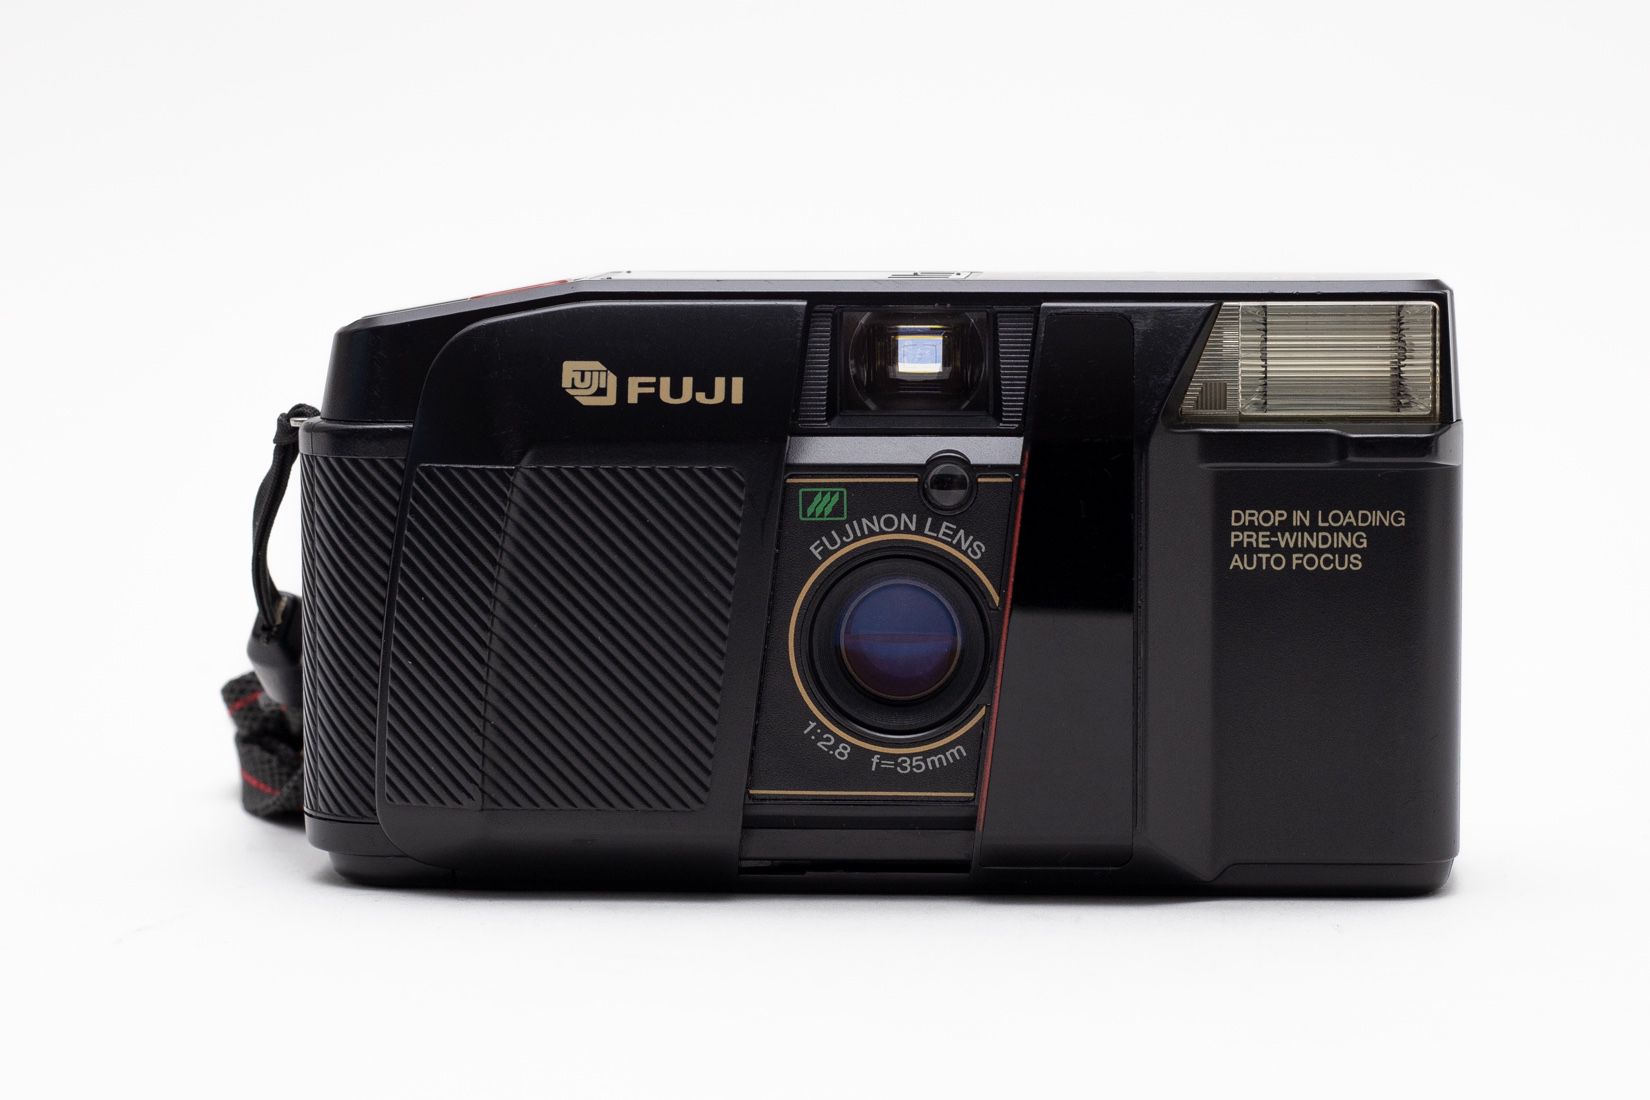 Fuji DL-300 35mm Film Camera!